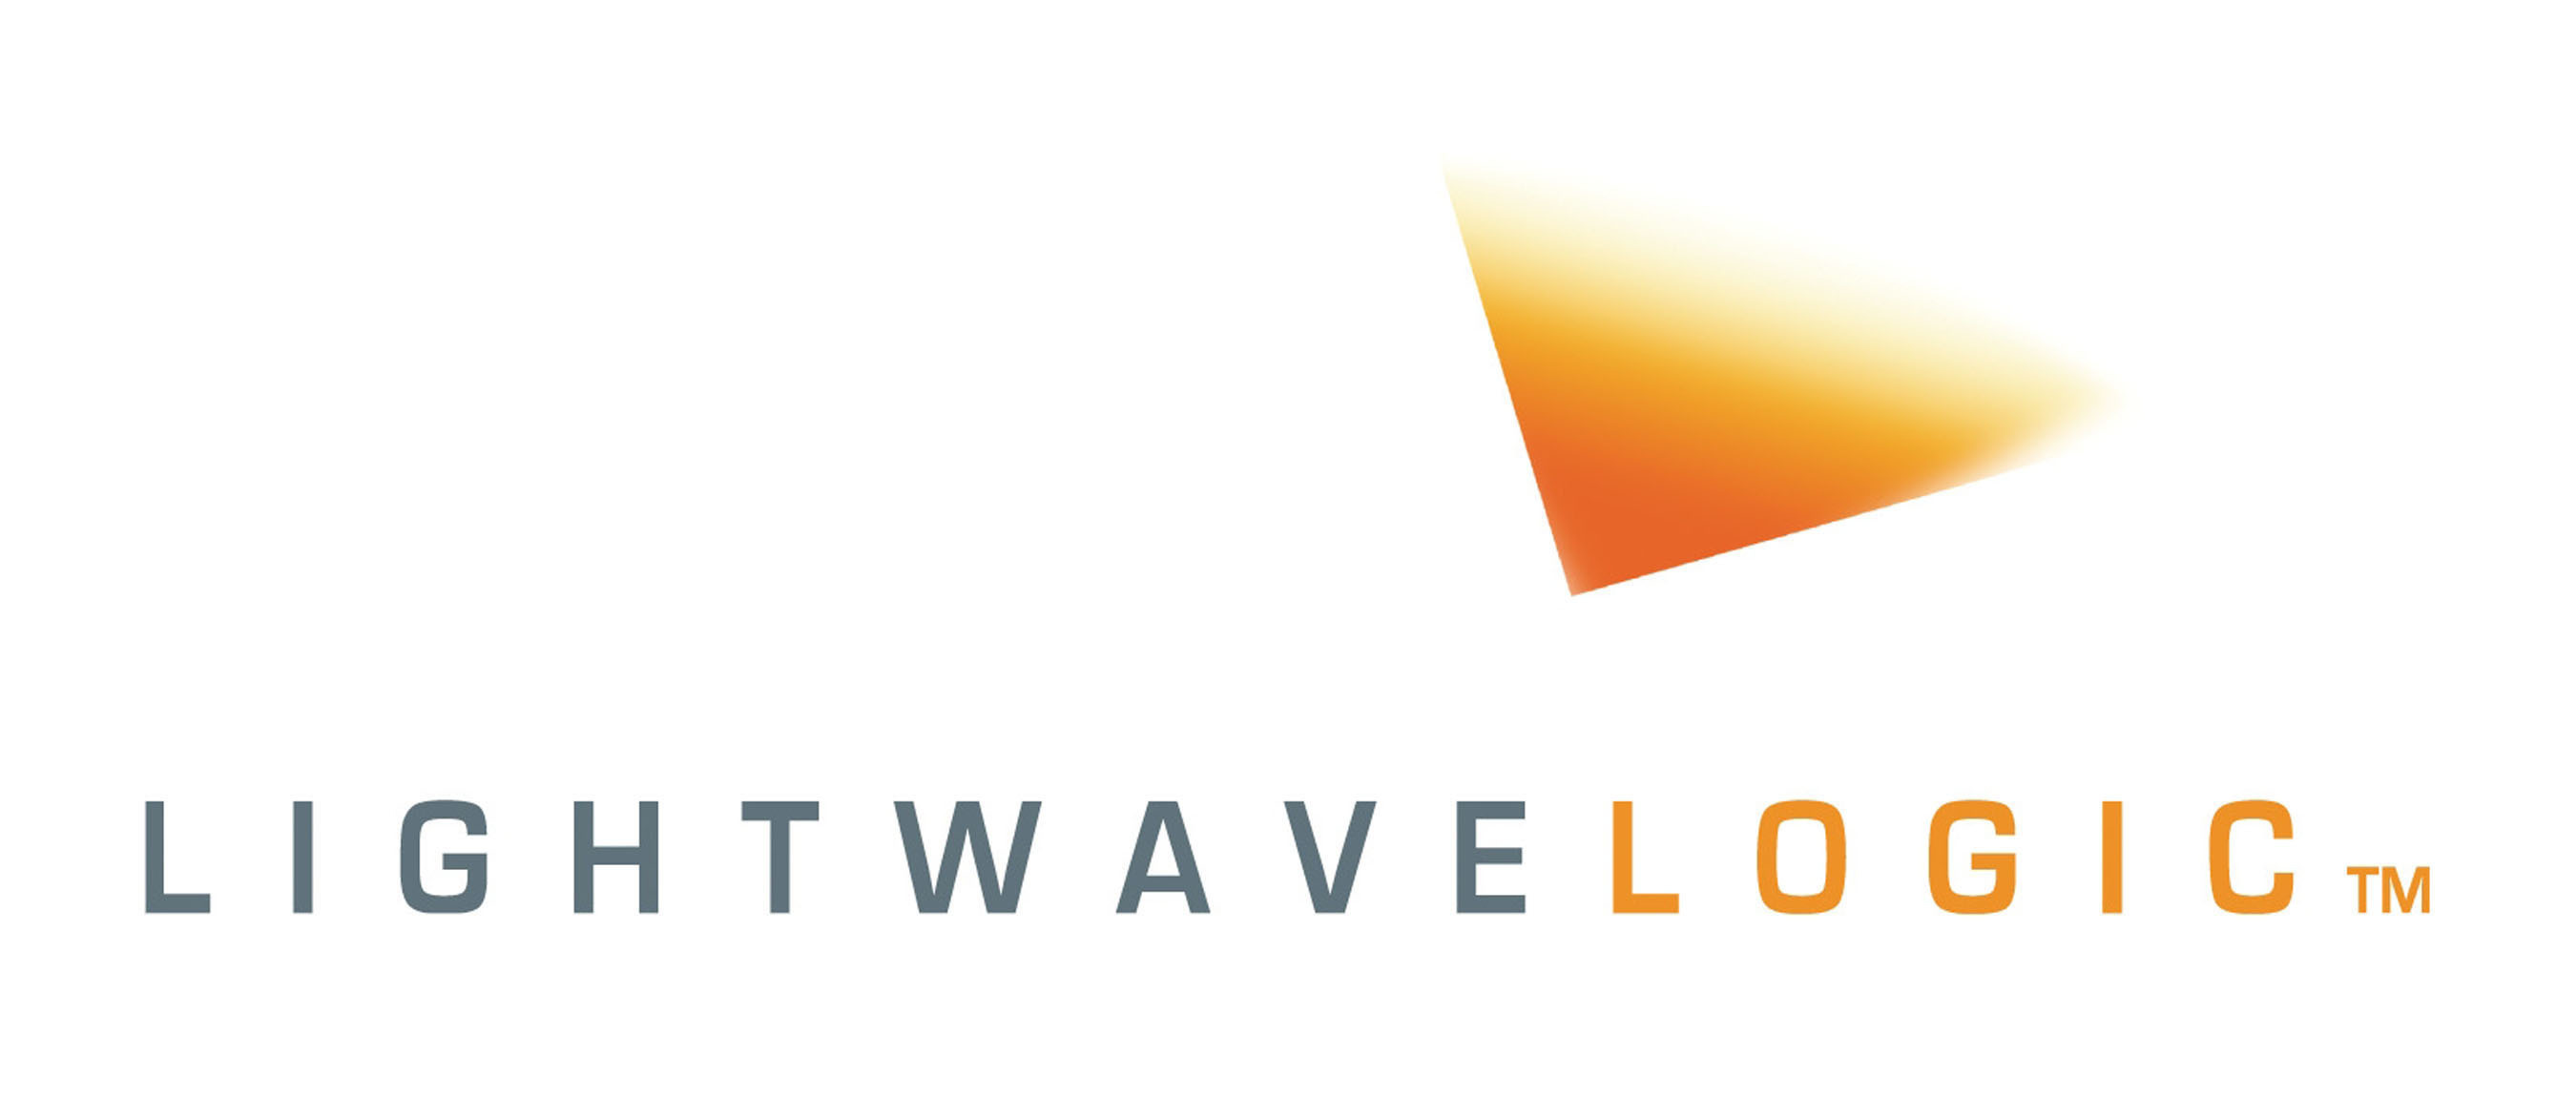 Lightwave Logic Logo. (PRNewsFoto/Lightwave Logic, Inc.) (PRNewsFoto/)